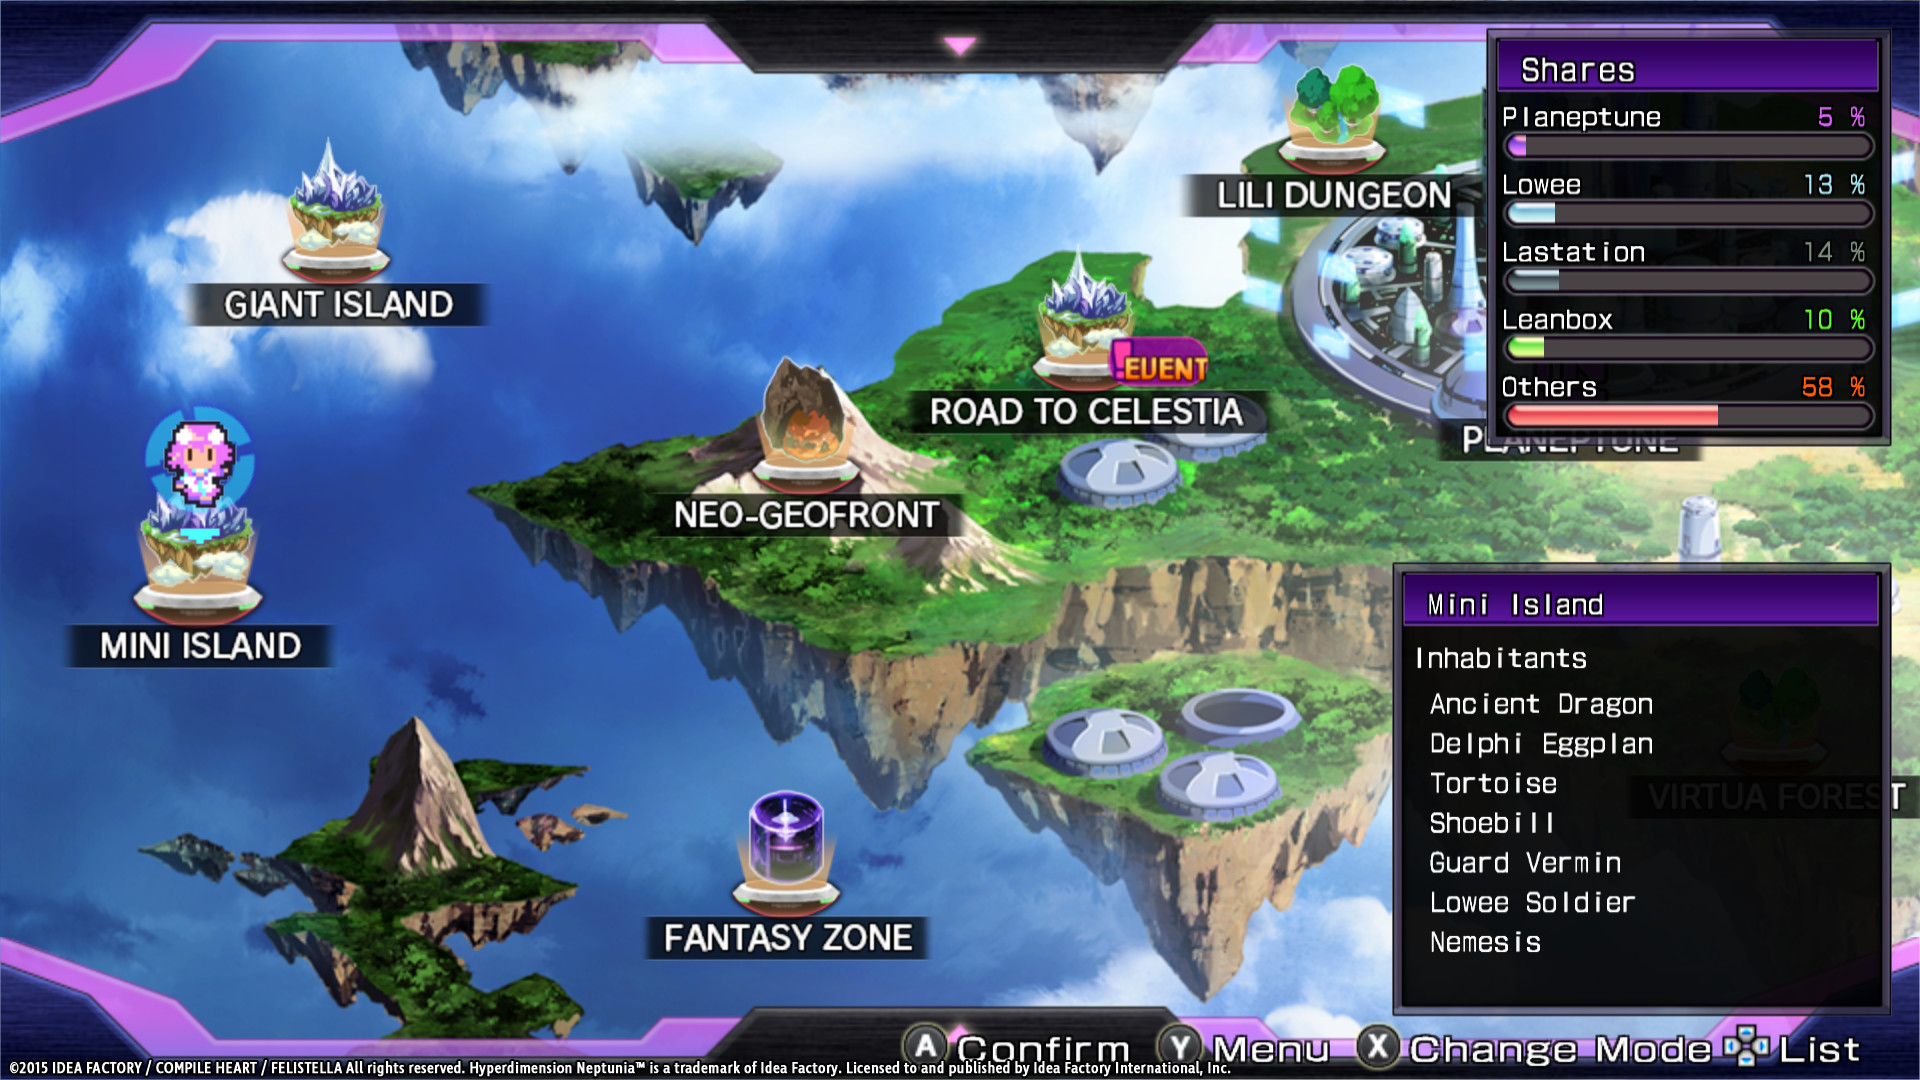 Hyperdimension Neptunia Re;Birth1 Peashy Battle Entry DLC, PC Steam  Downloadable Content